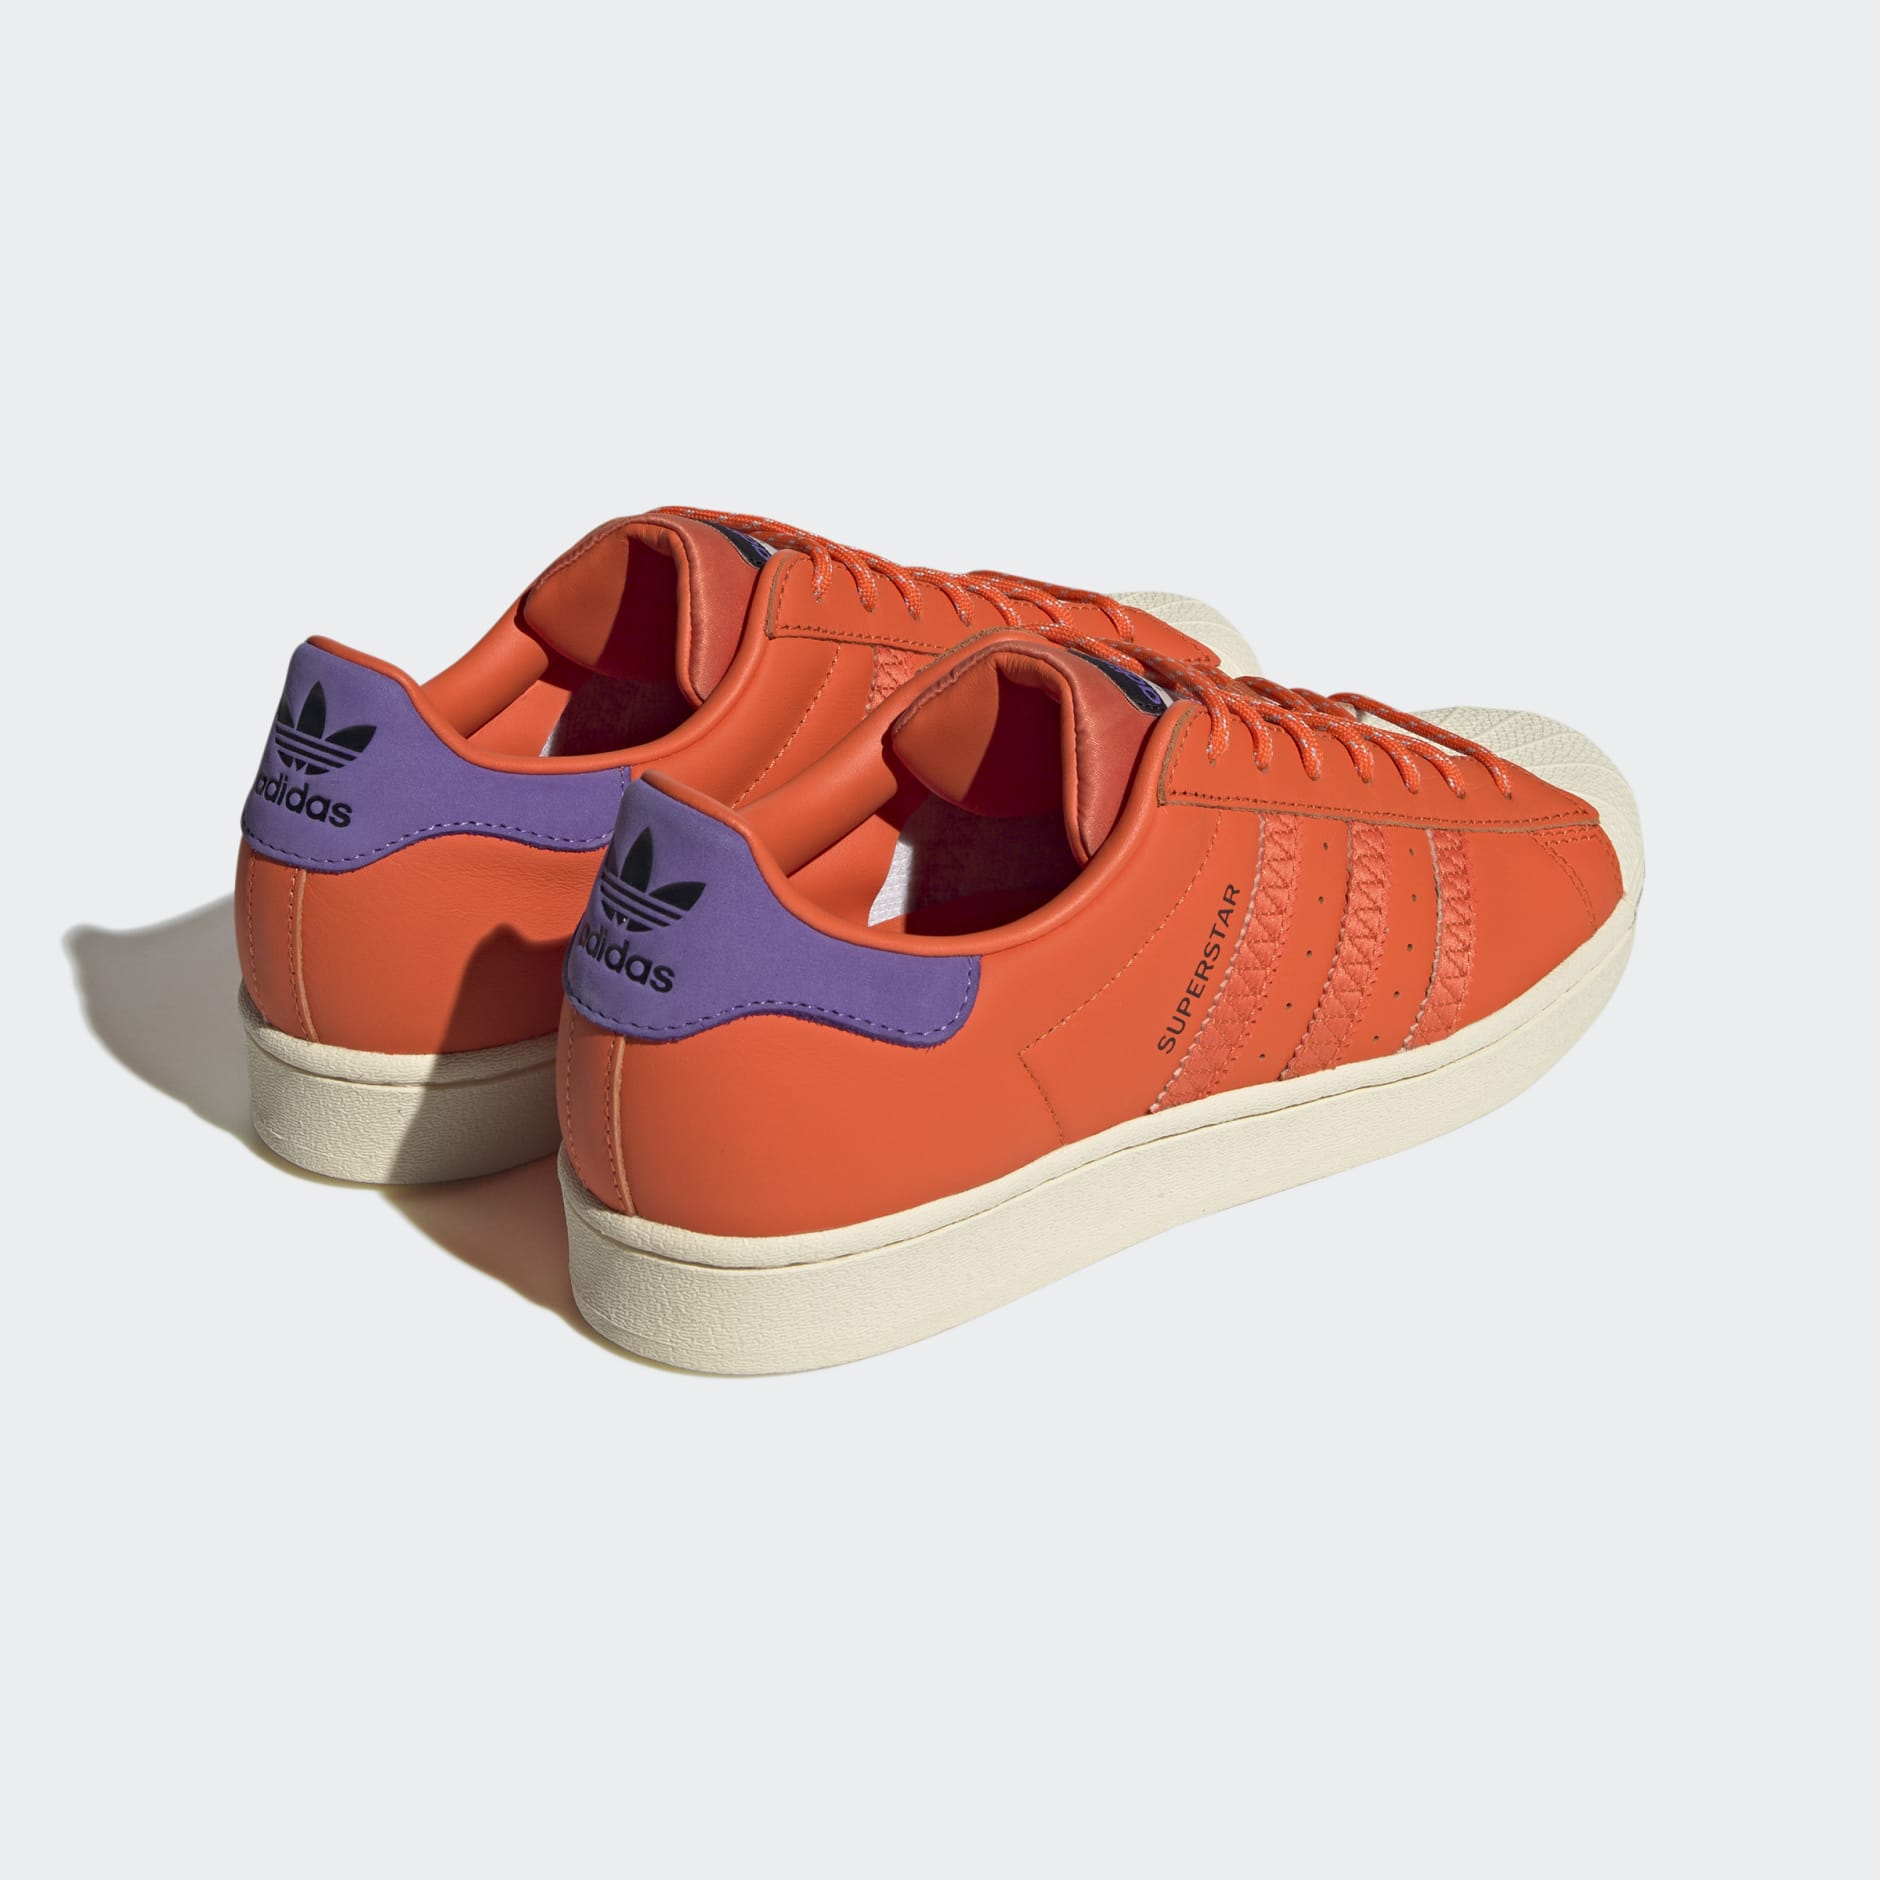 Men's Shoes - Superstar Shoes - Orange | adidas Saudi Arabia